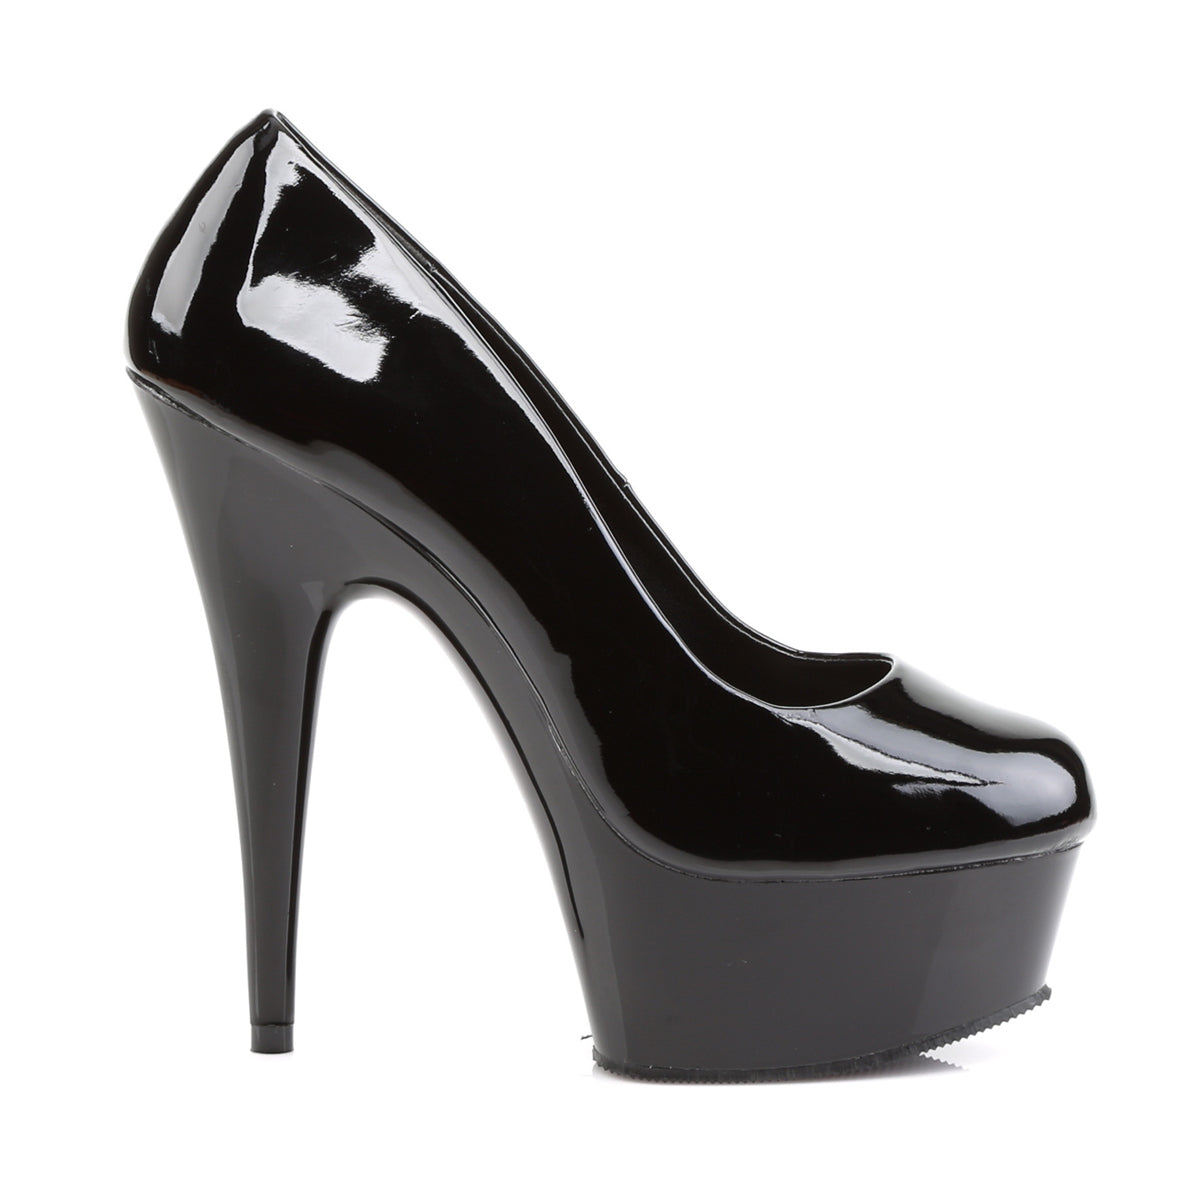 DELIGHT-685 6" Heel Black Patent Pole Dancing Platforms-Pleaser- Sexy Shoes Fetish Heels